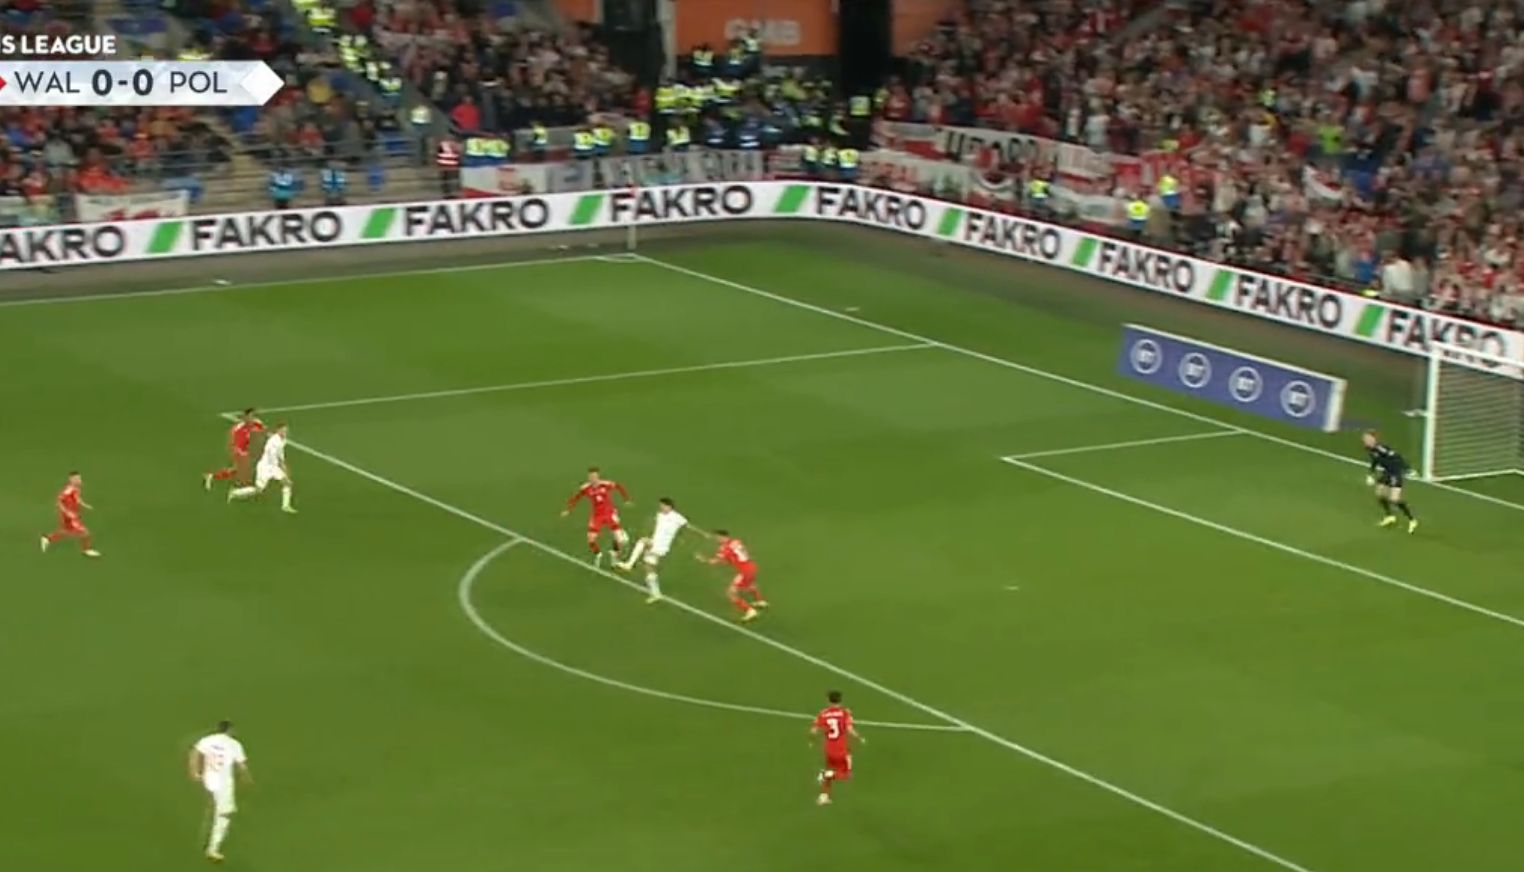 Video: World-Class assist from Lewandowski helps Poland take lead against Wales